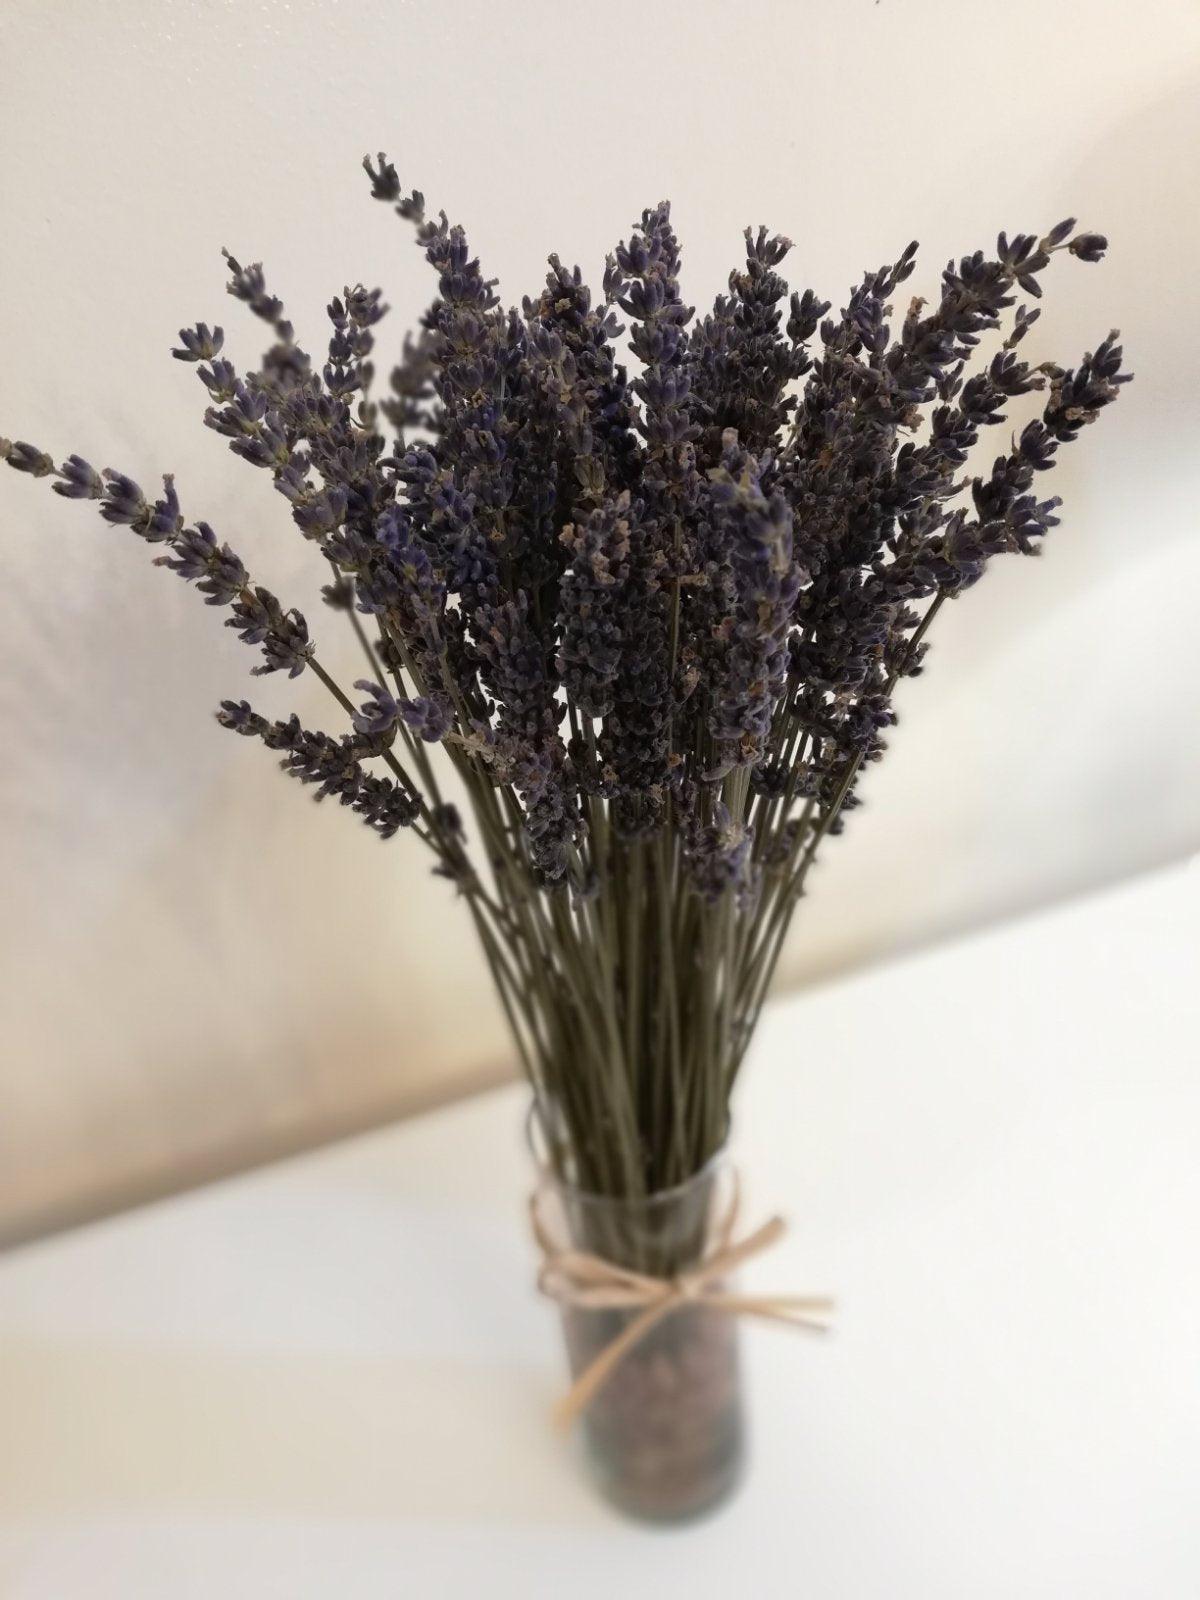 The Lavender Mini Bundle with Vase